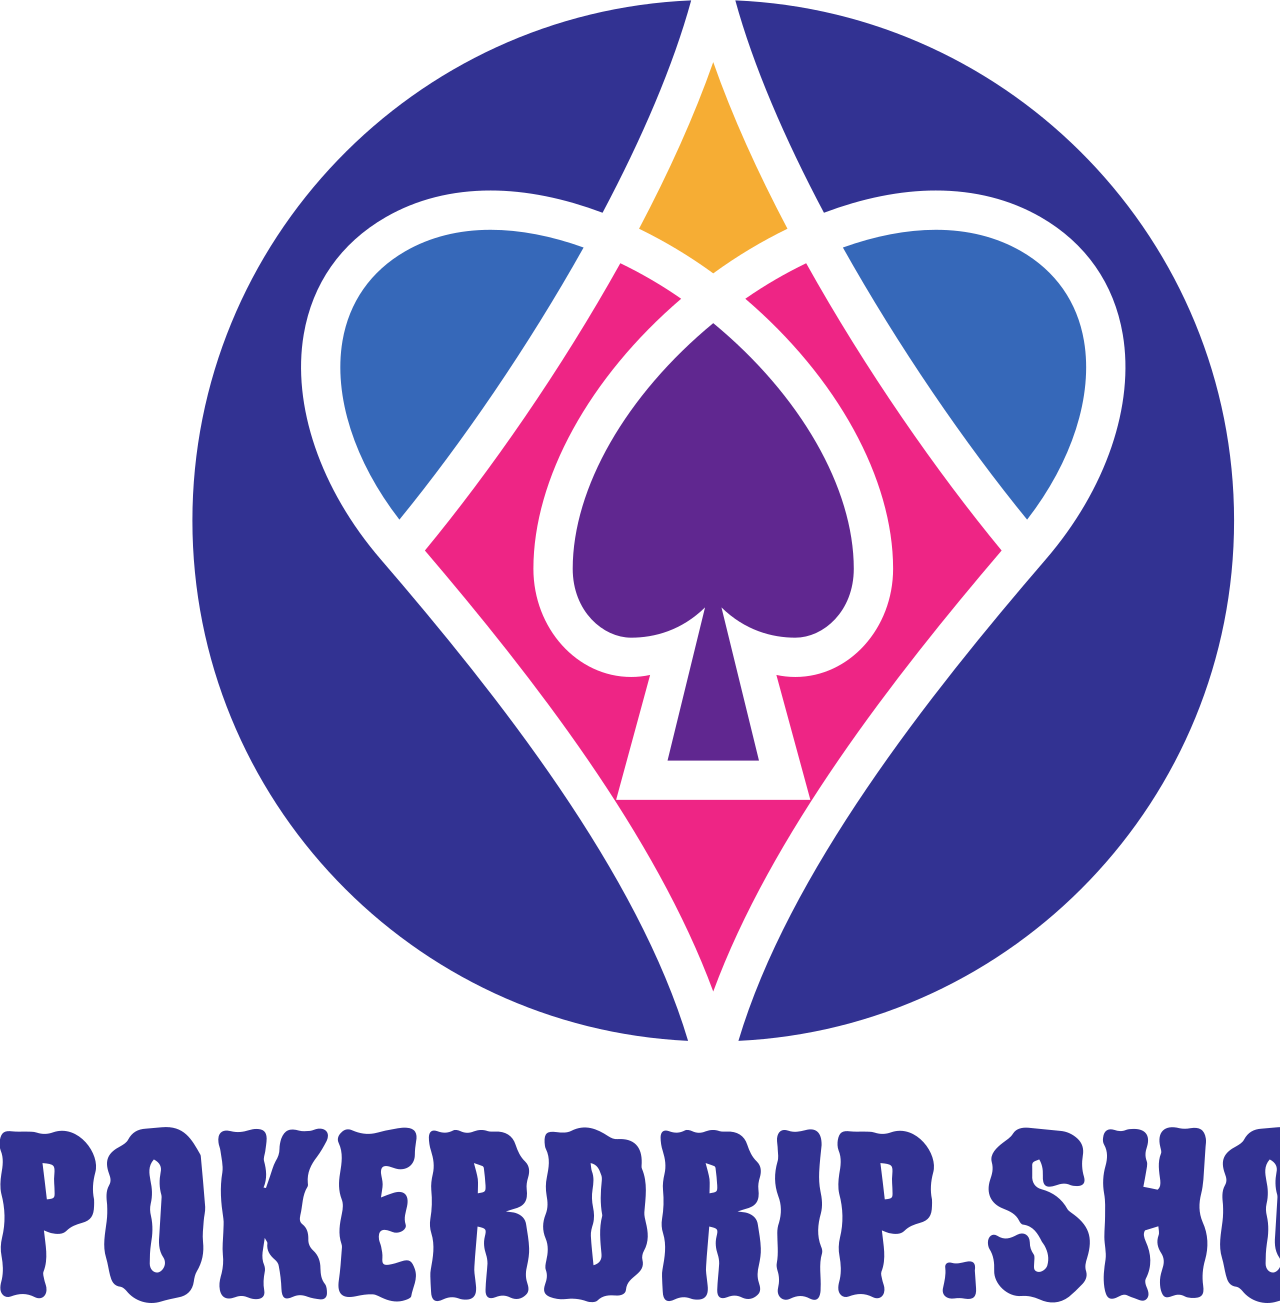 Pokerdrip.shop's logo